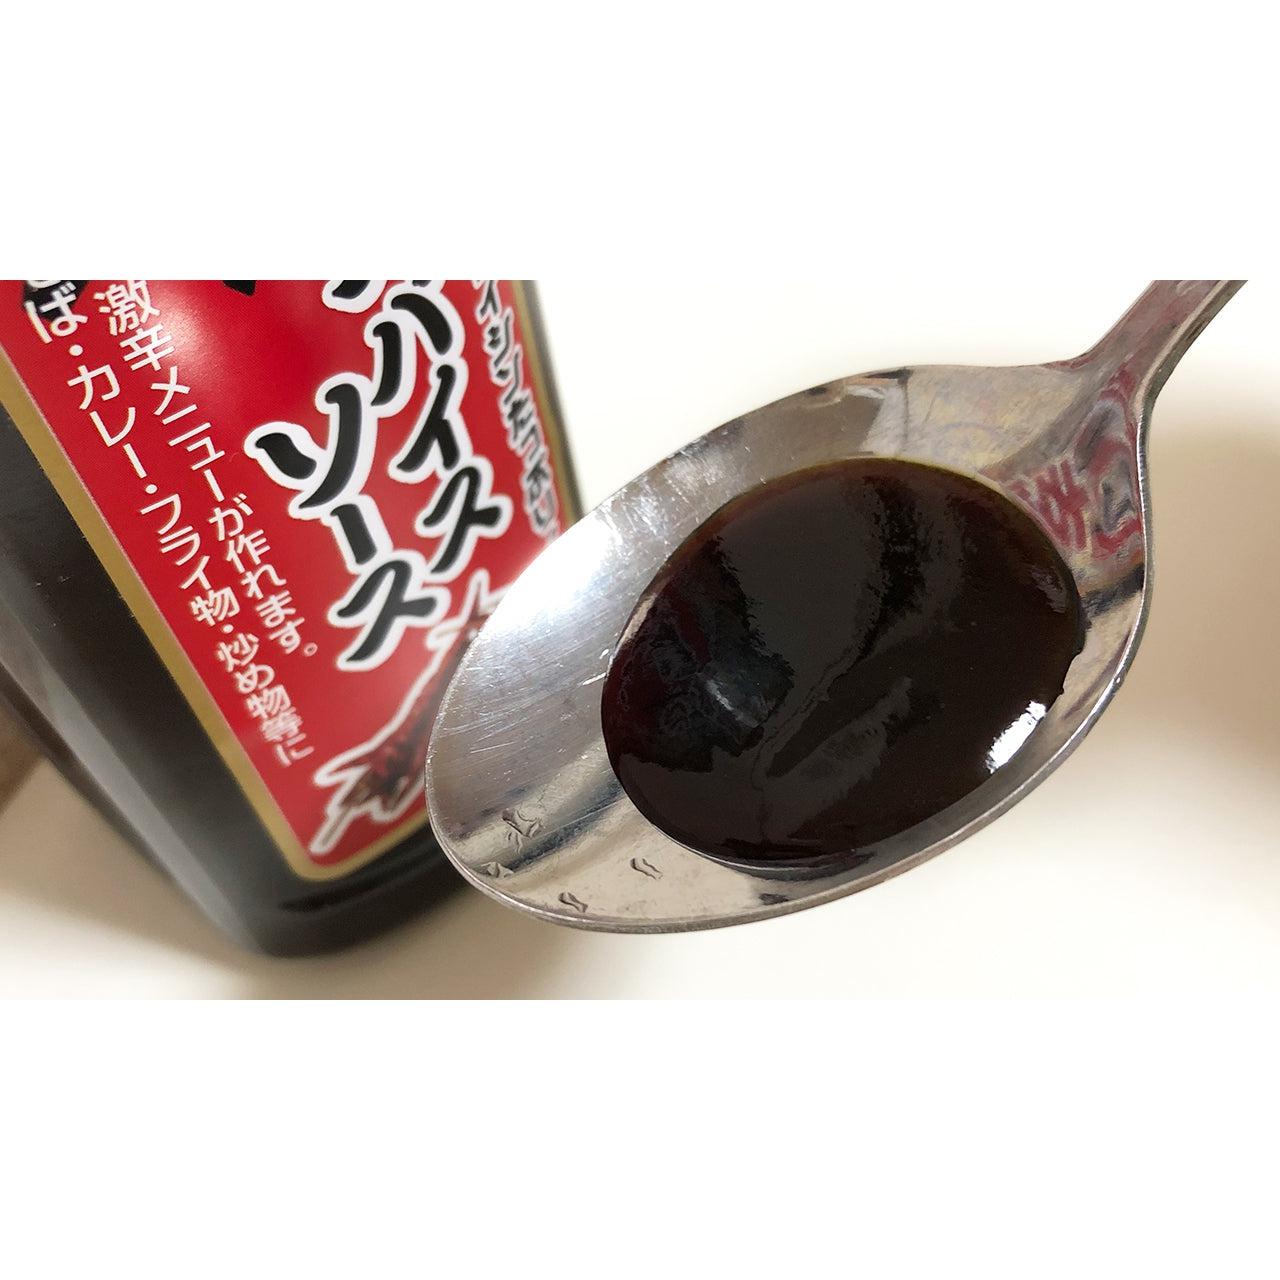 Daikokuya Japanese Super Hot Sauce 500ml - YOYO JAPAN